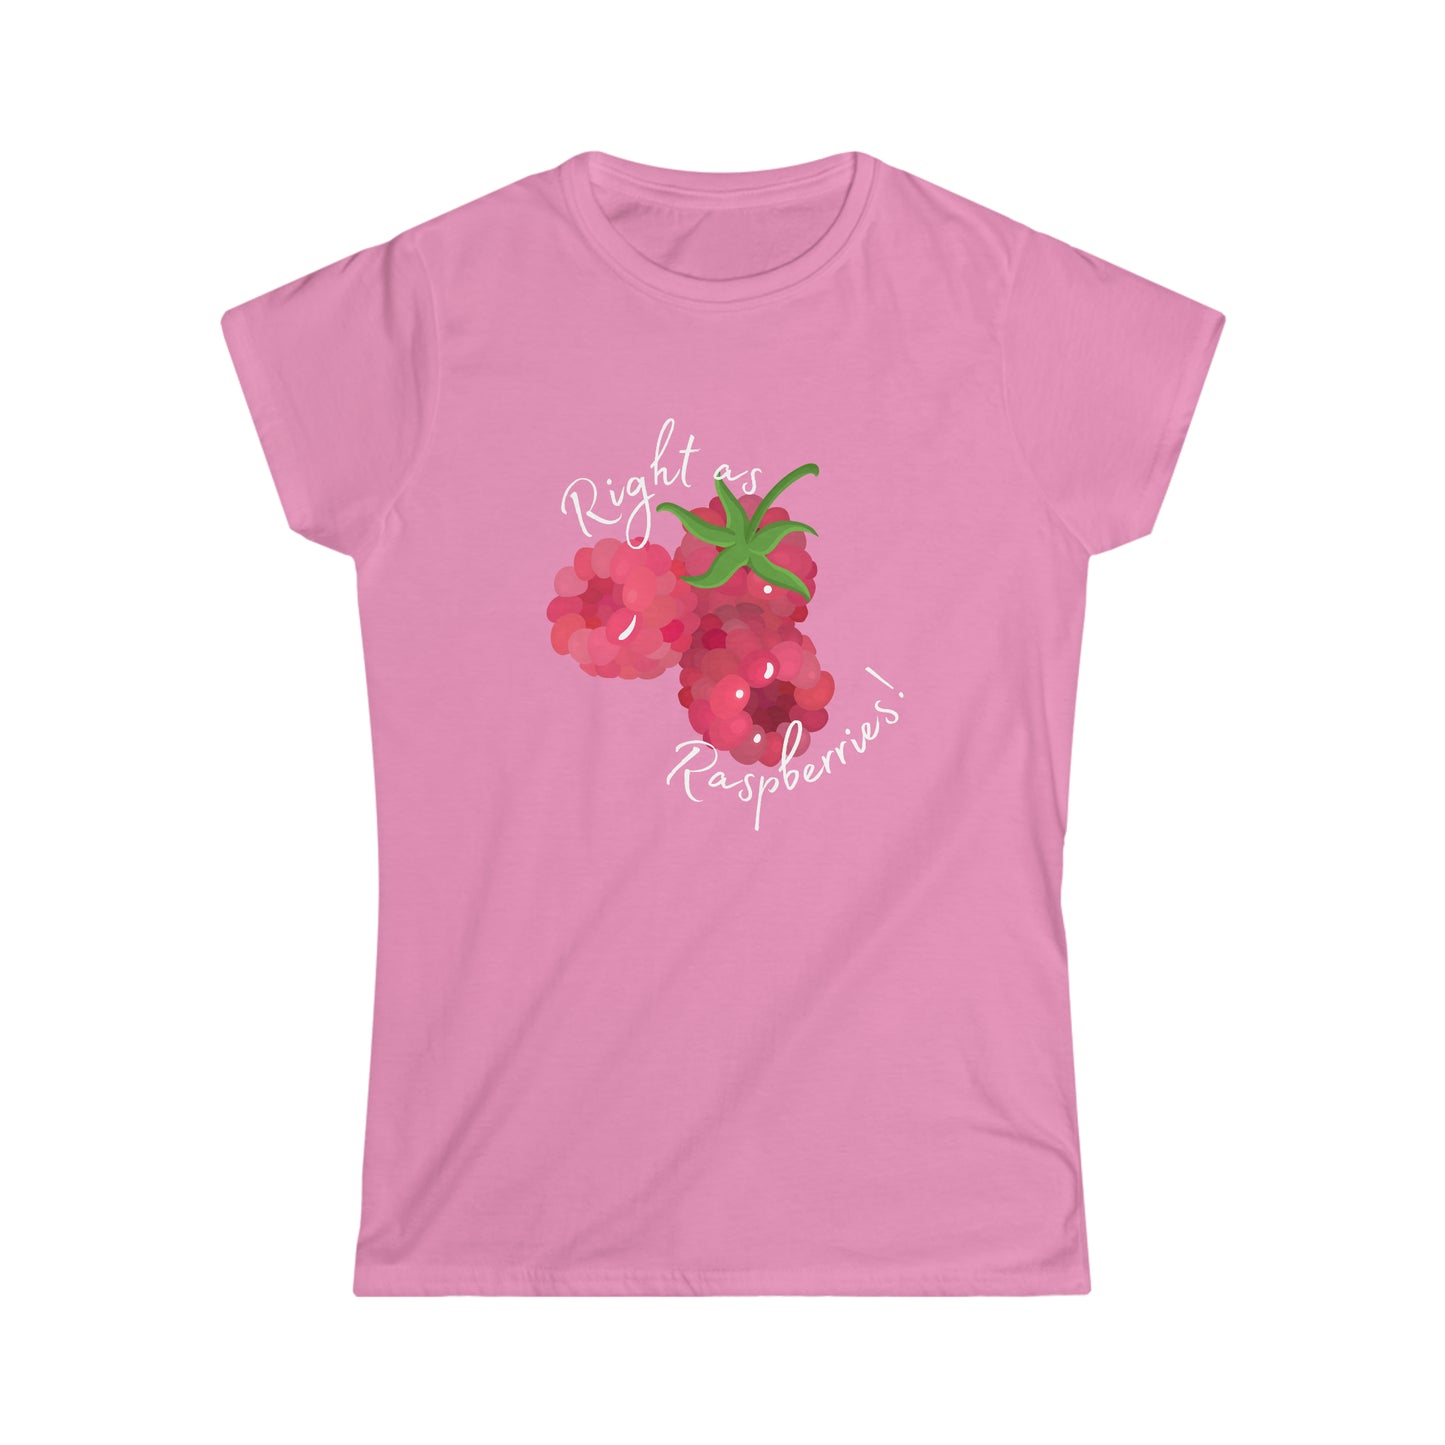 Right as Raspberries: T-Shirt